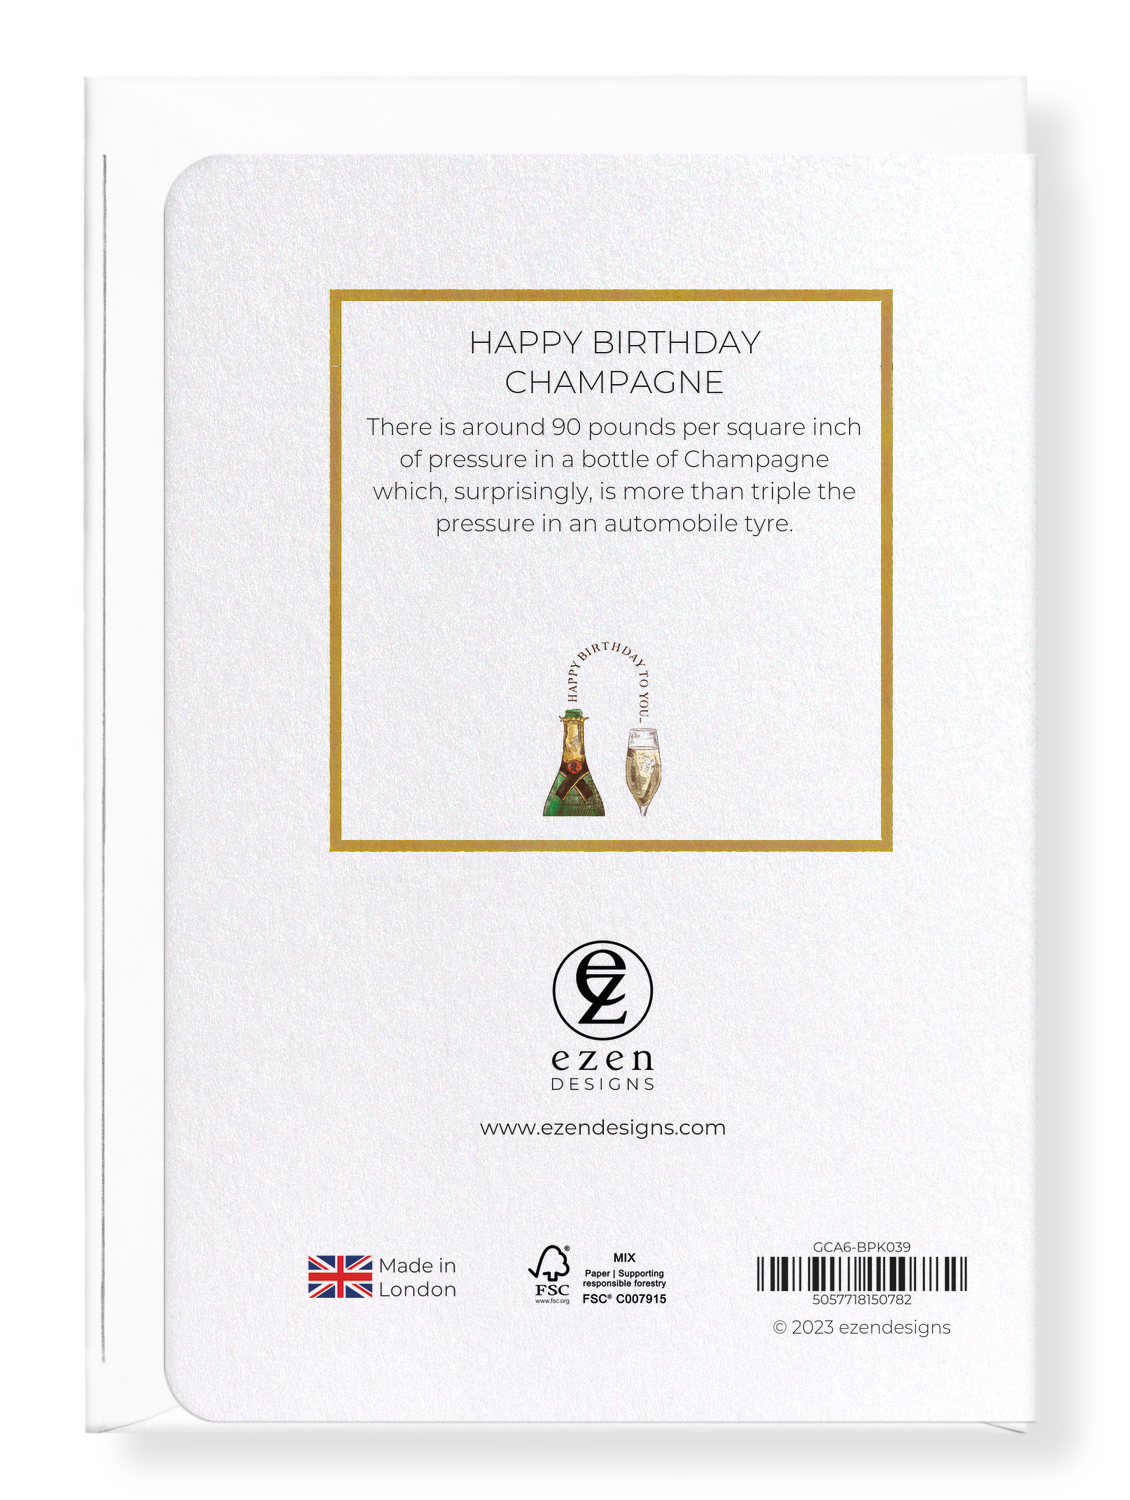 Ezen Designs - Happy Birthday Champagne - Greeting Card - Back